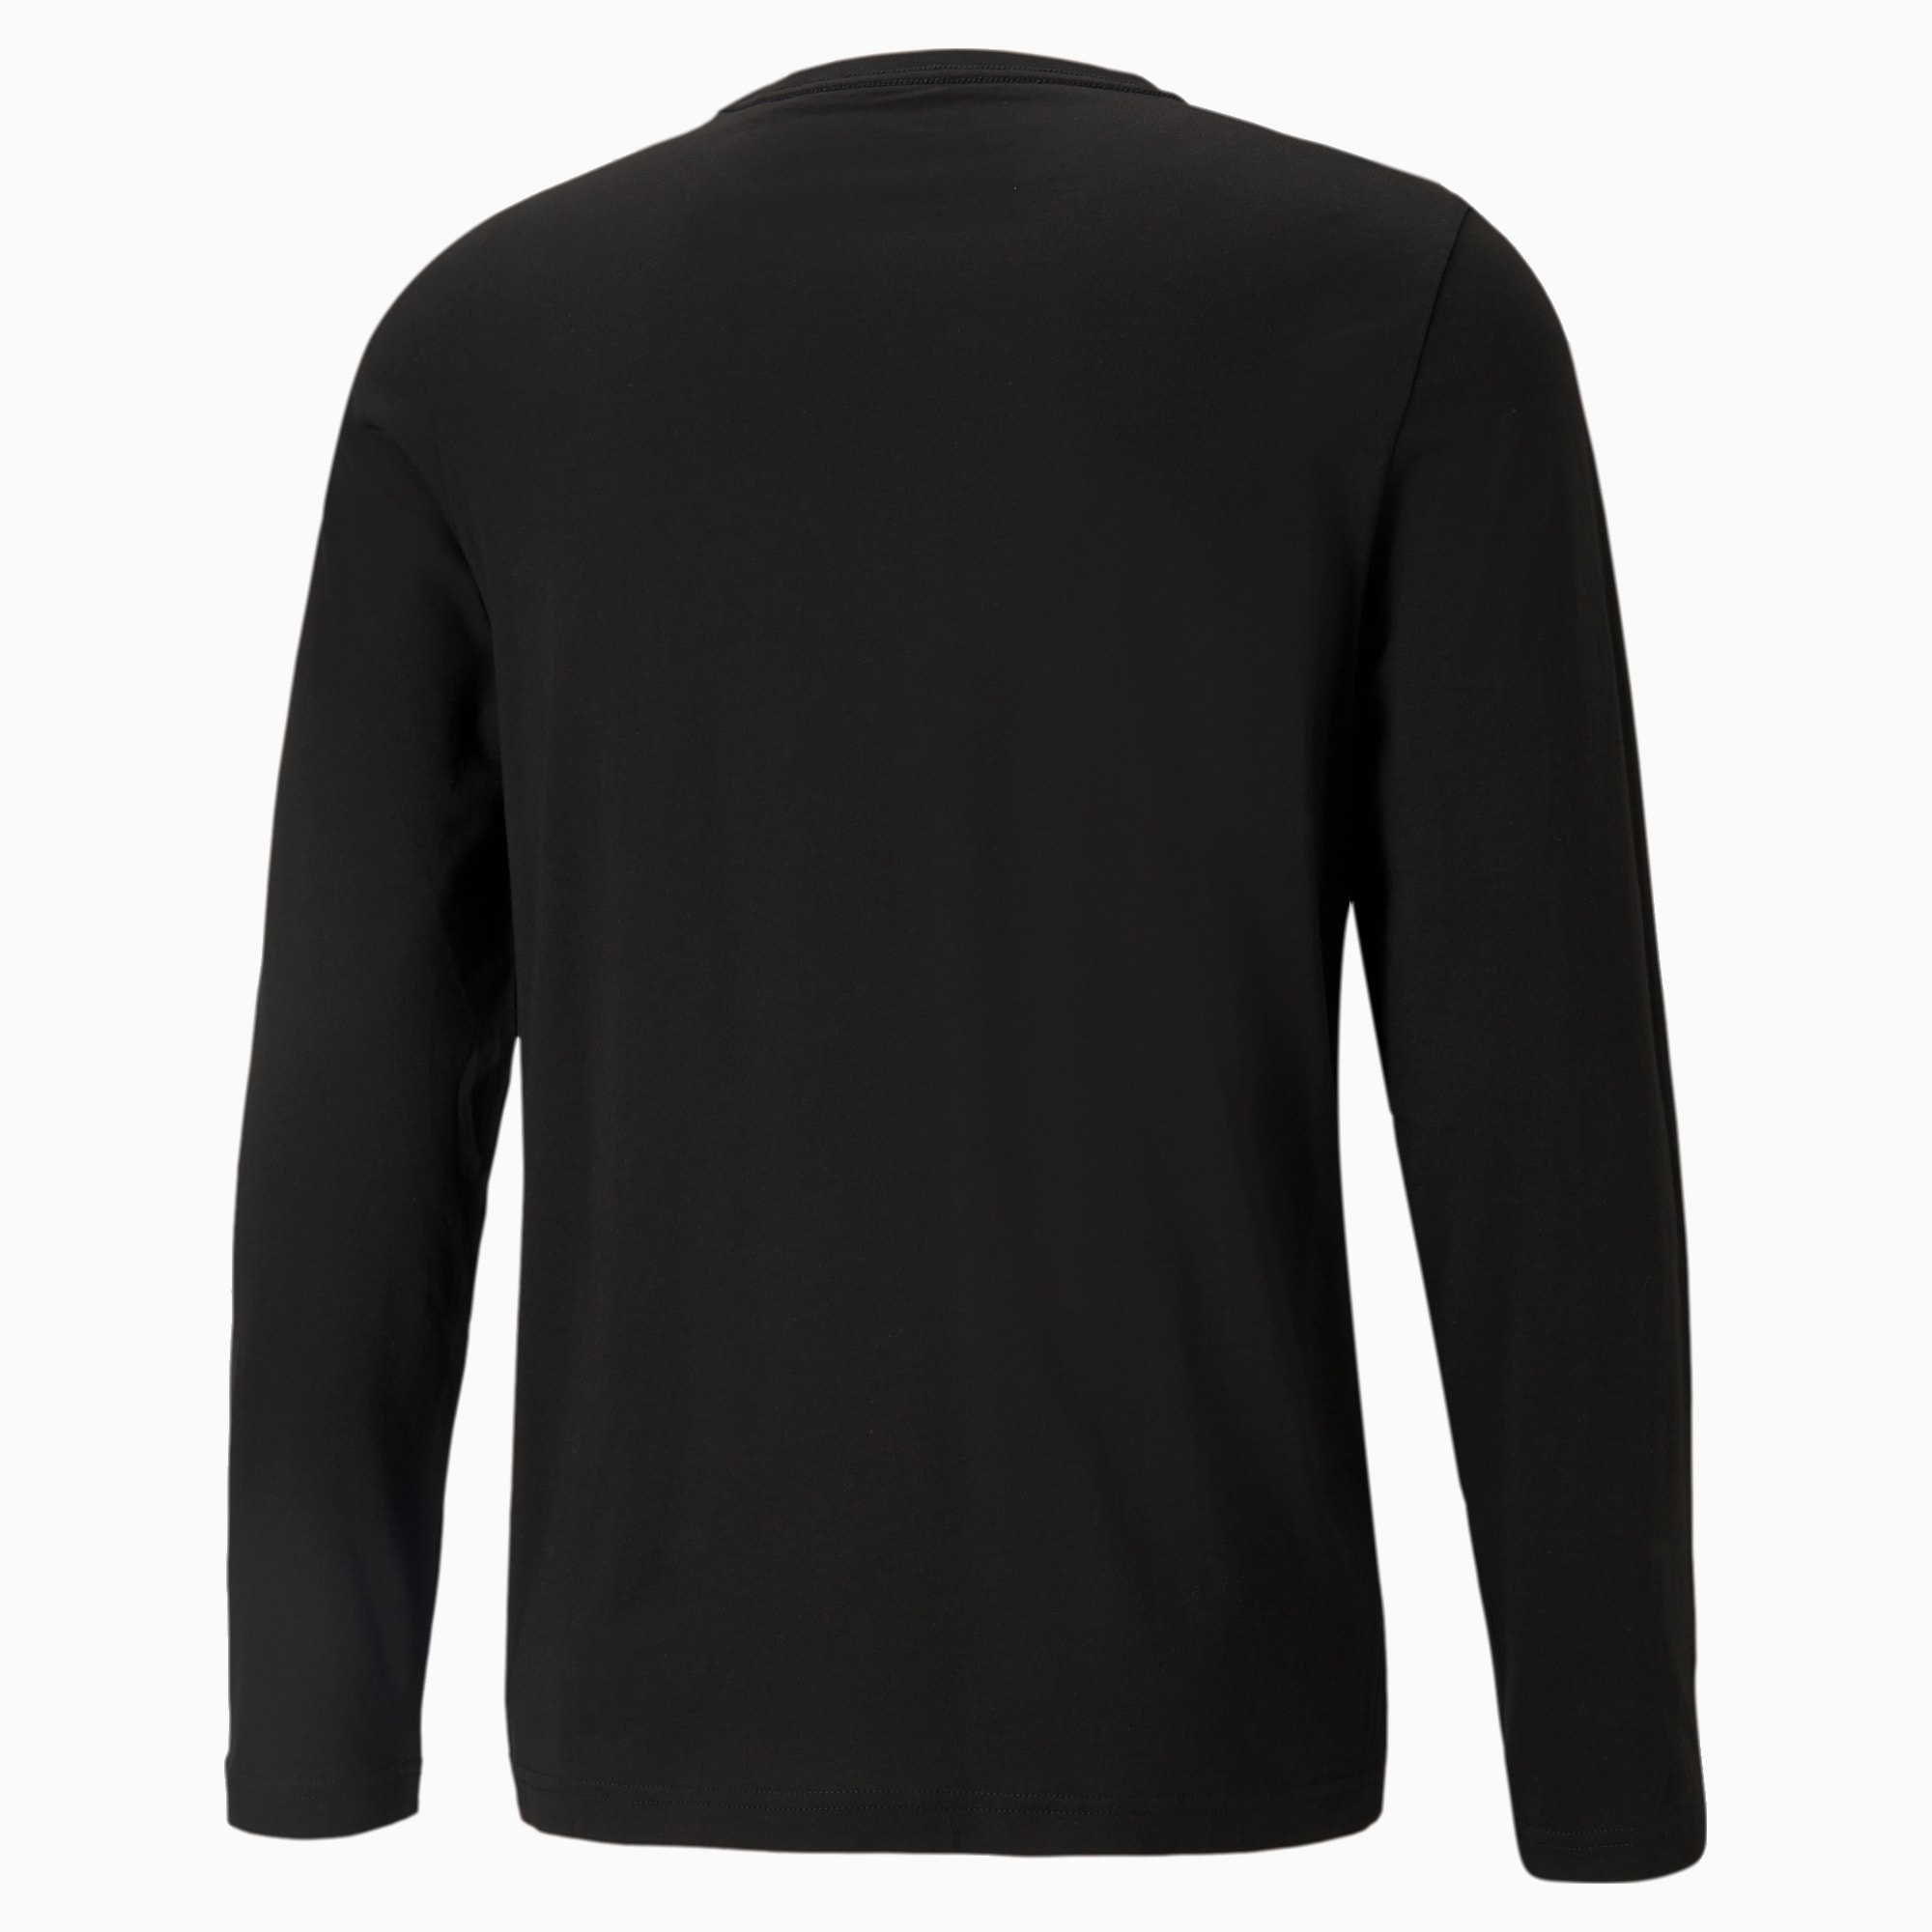 PUMA Essentials Long Sleeve Men's T-Shirt, Black, Size XXS, Clothing